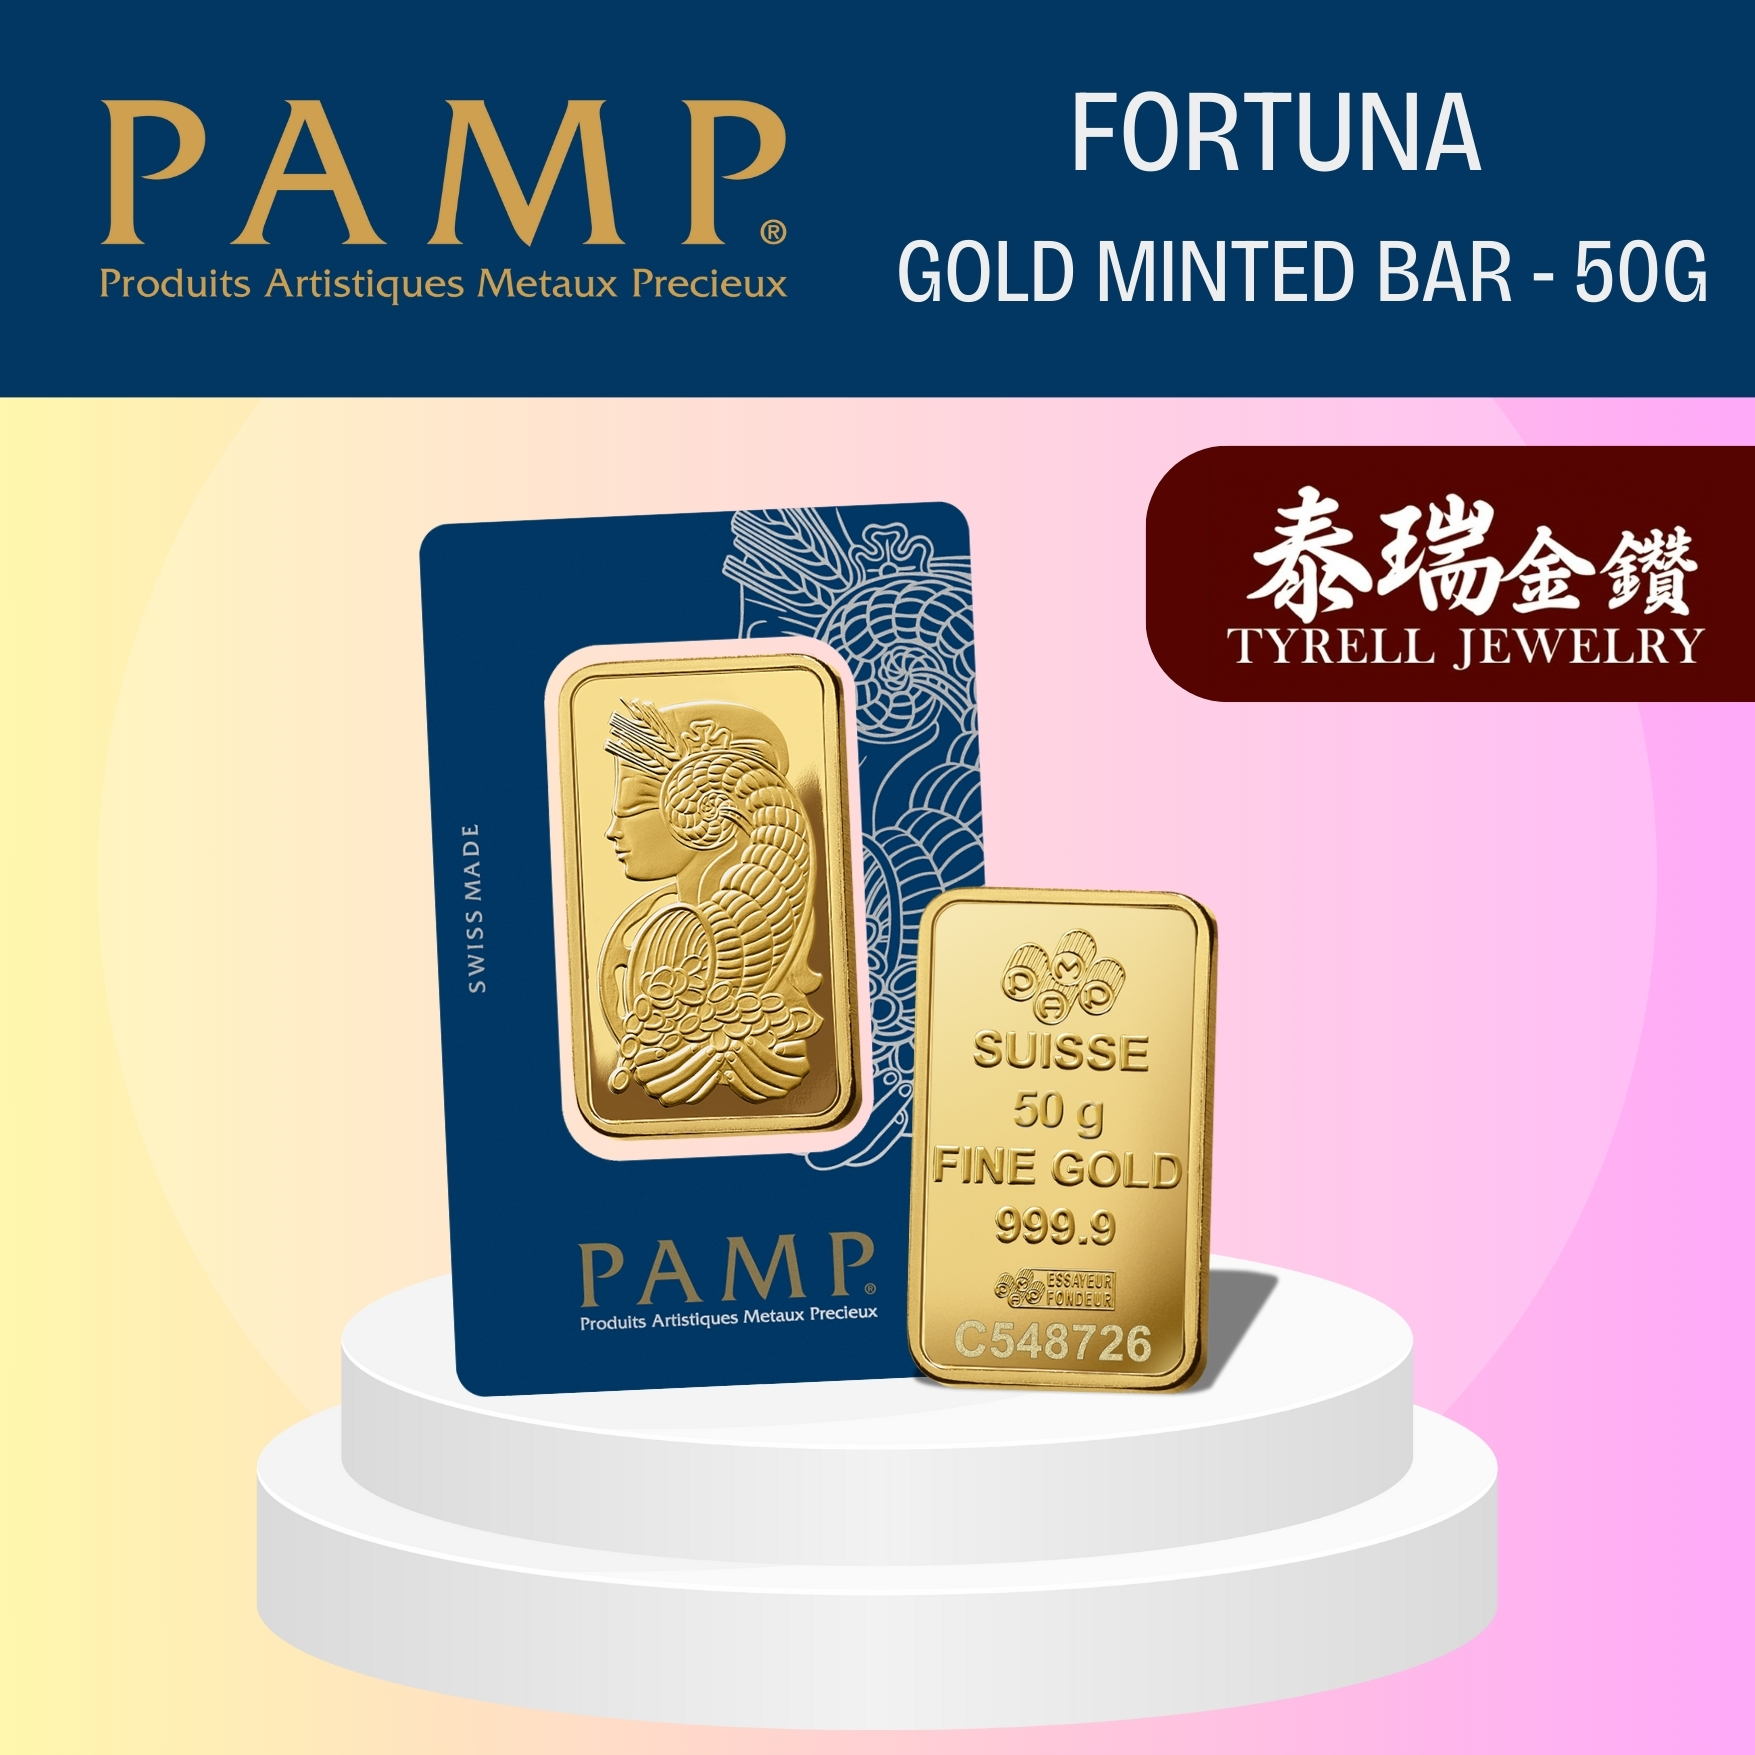 Fortuna Gold Minted Bar - 50g